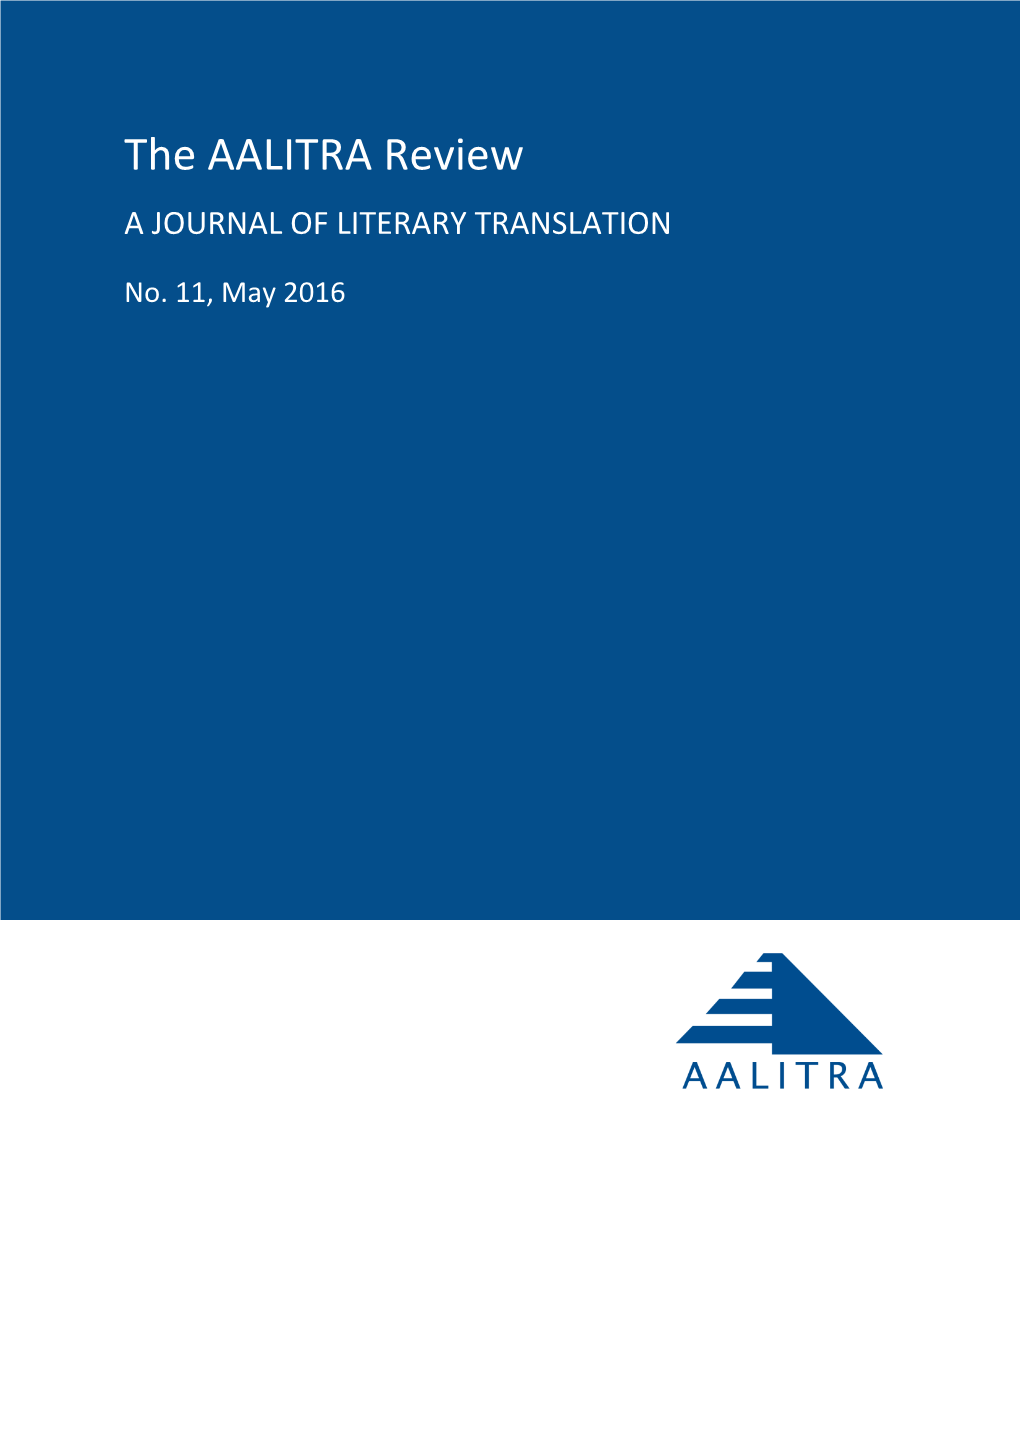 A Journal of Literary Translation